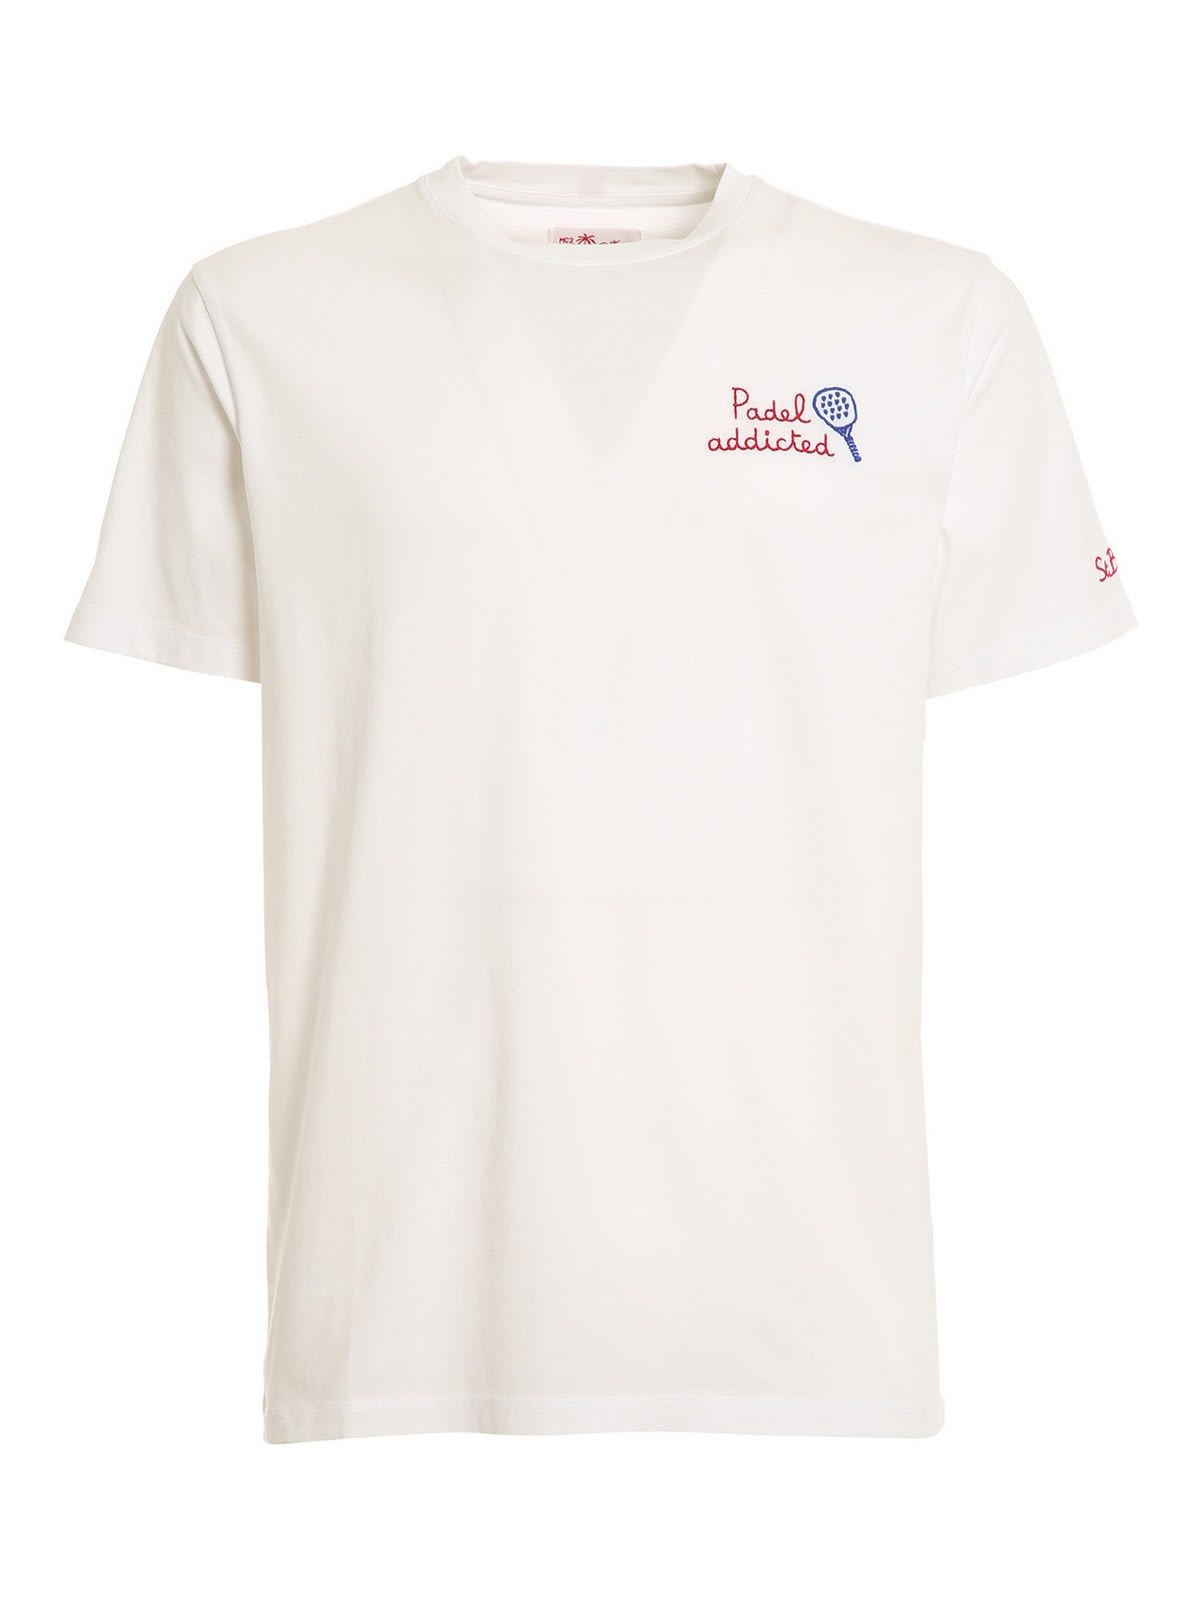 MC2 Saint Barth T-shirt Padle Addicted Bianca Portofino00471b